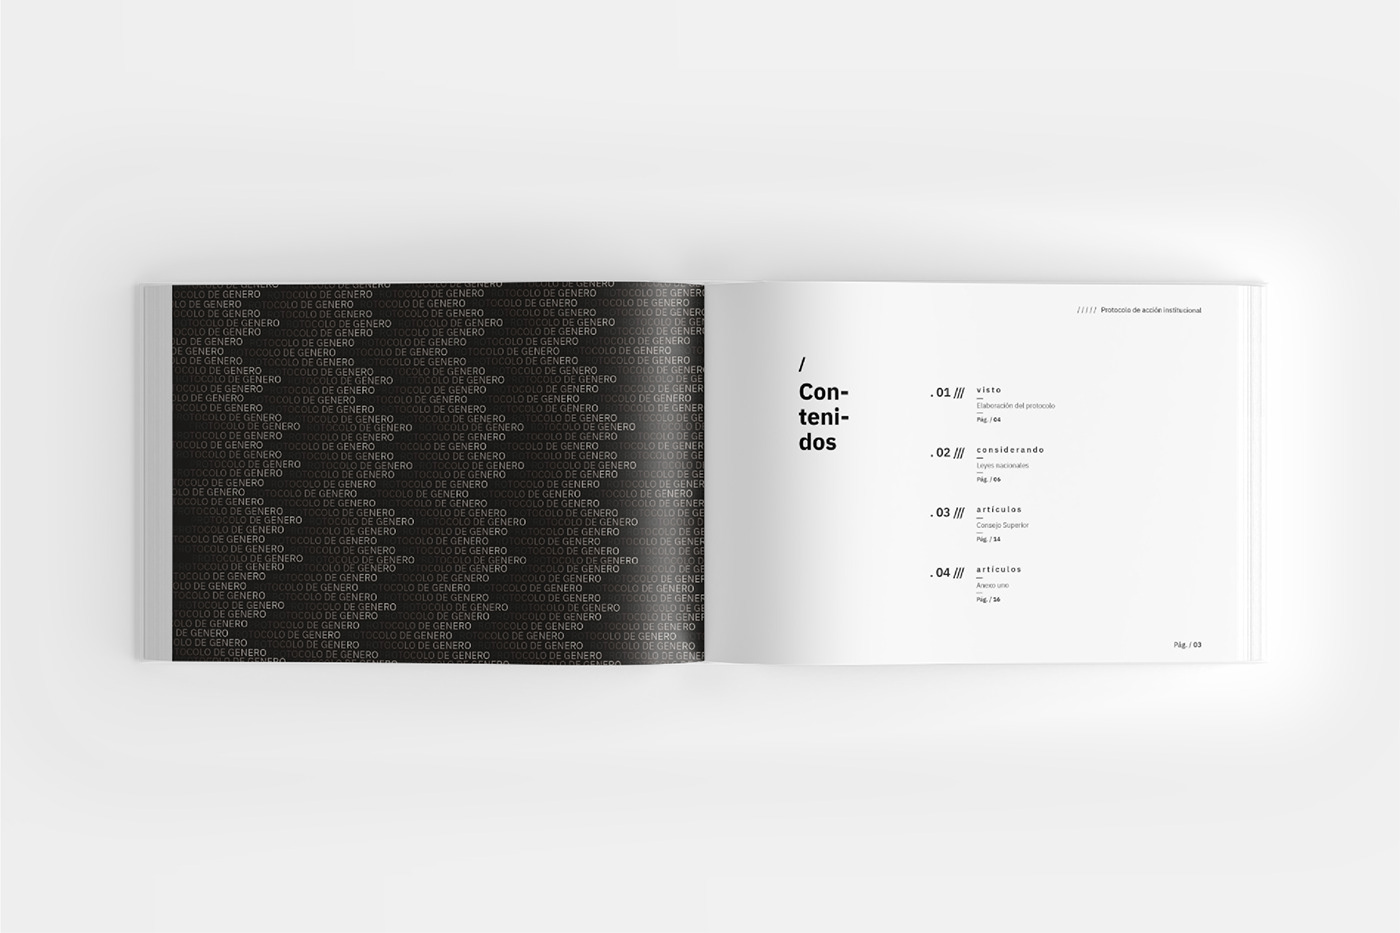 fadu Massimo rocio tipografia uba venancio book editorial design  design typography  